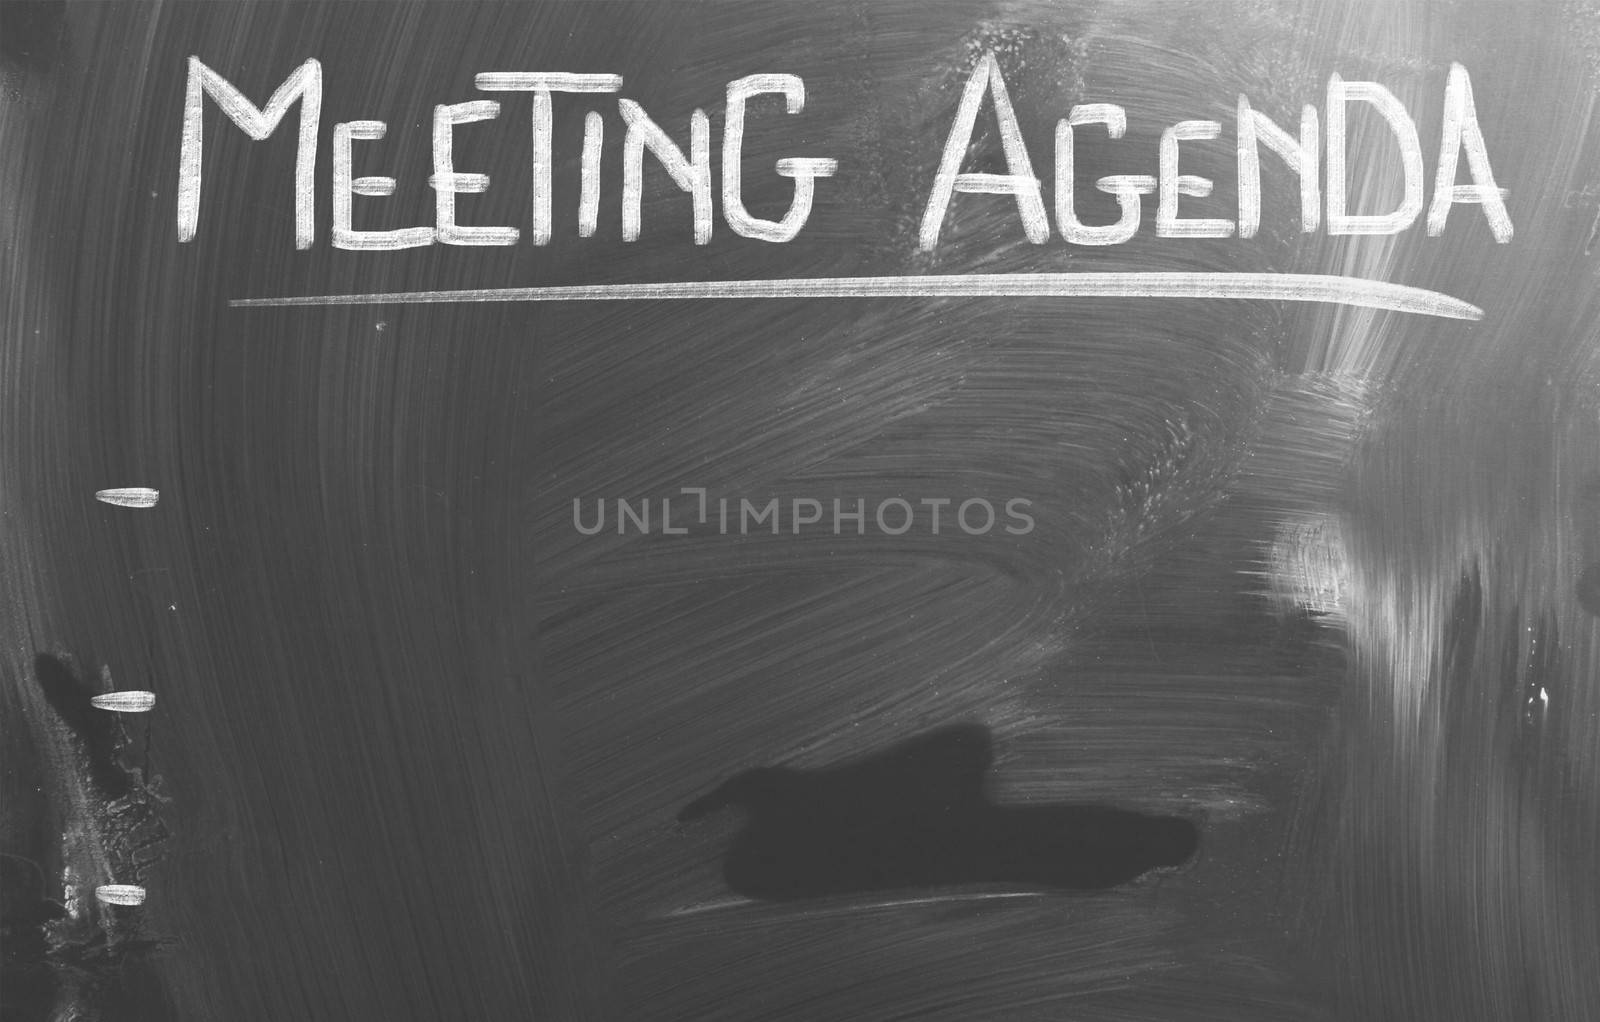 Meeting Agenda Concept